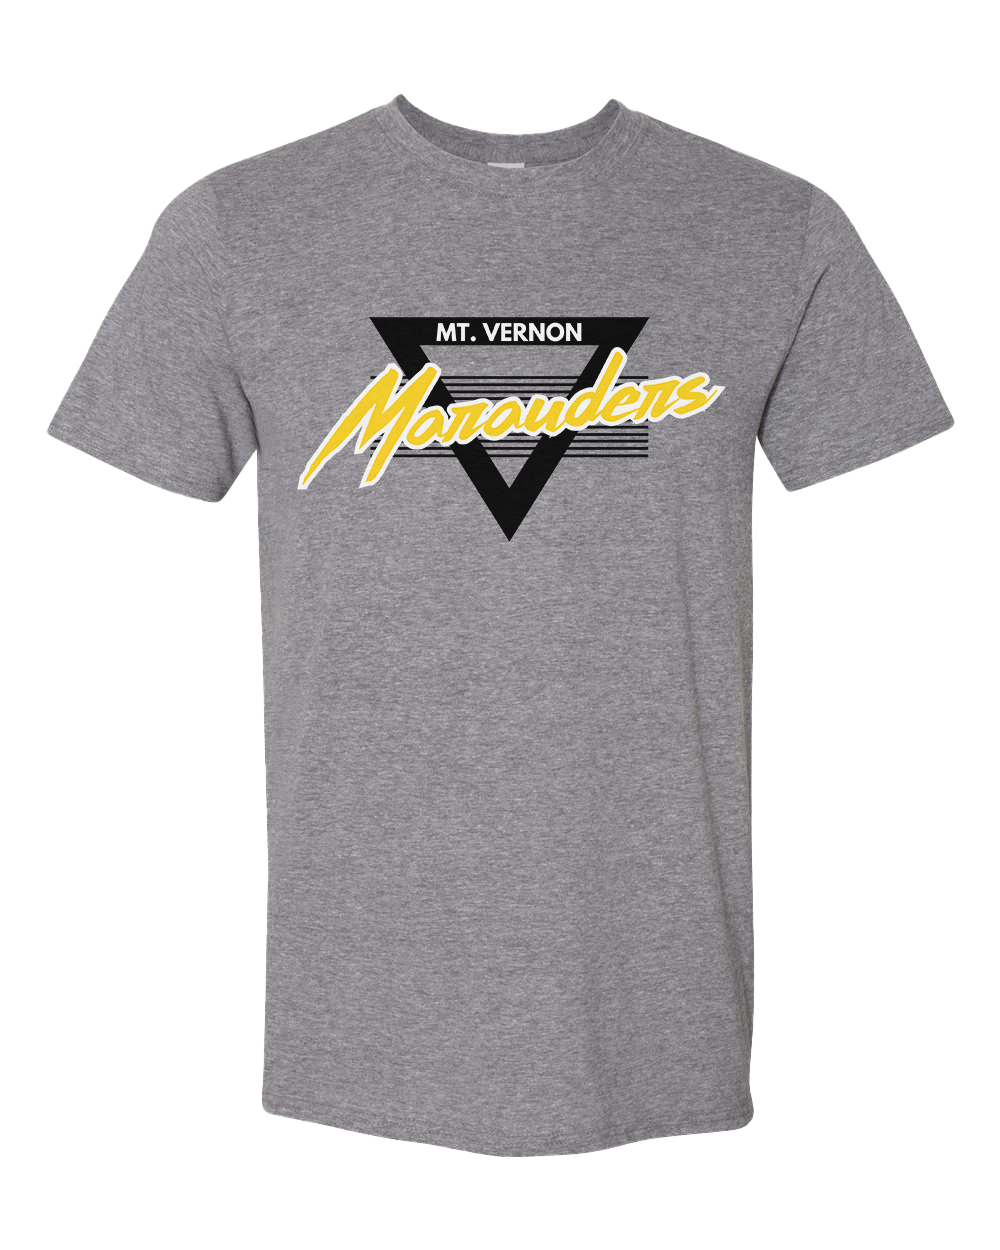 Mt. Vernon Marauders Retro 90's Tshirt - Graphite Heather